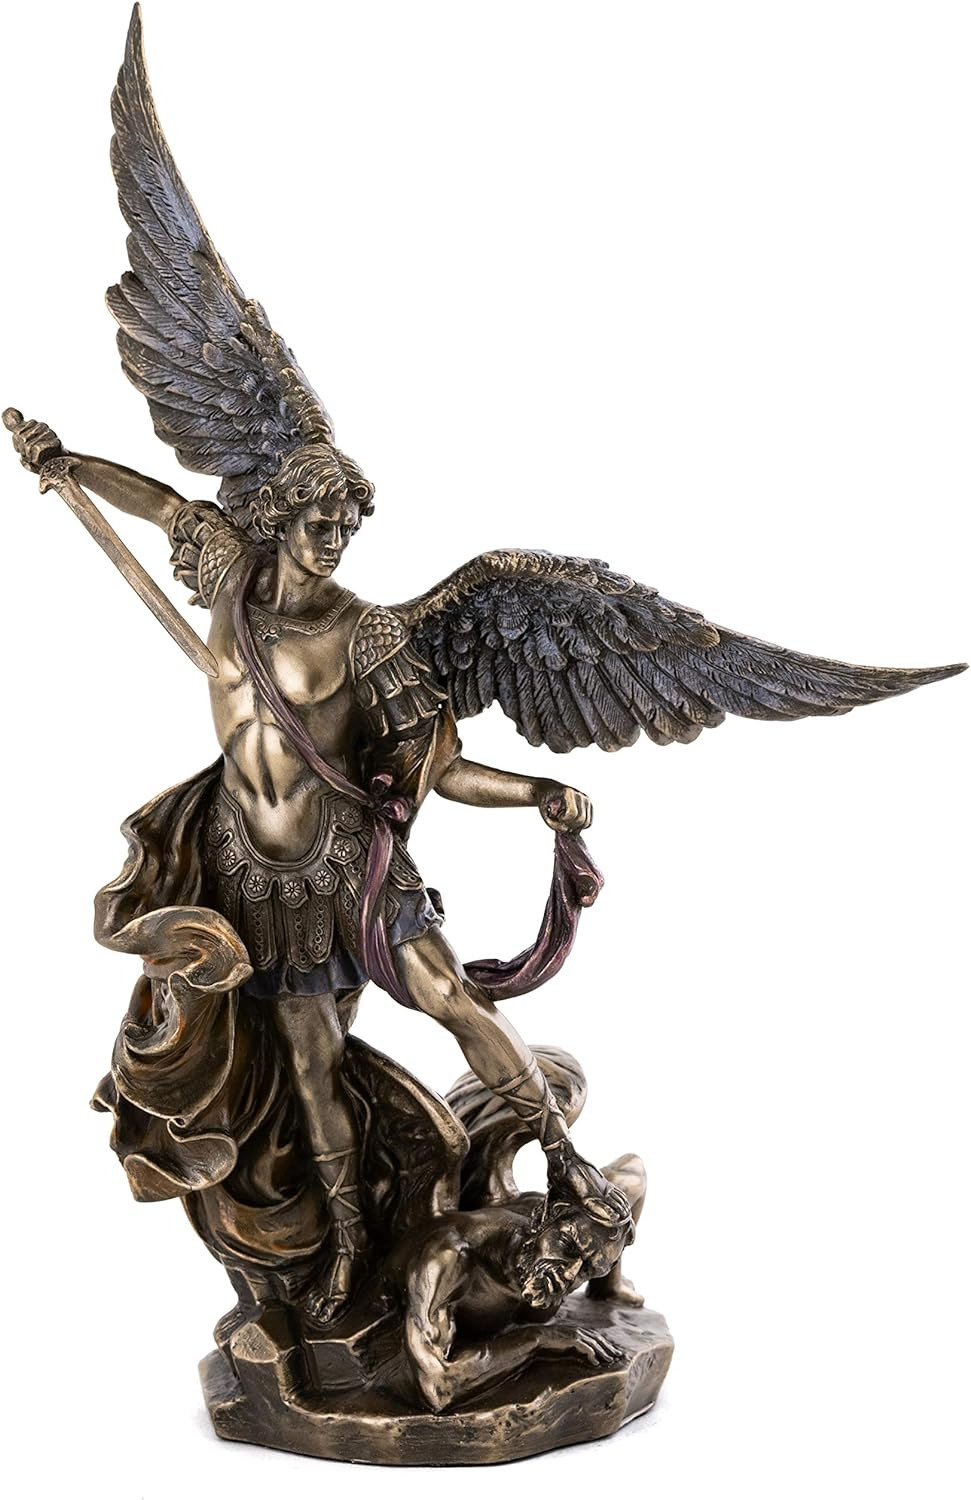 Archangel St. Michael Statue - Michael Archangel of Heaven Defeating Lucifer in